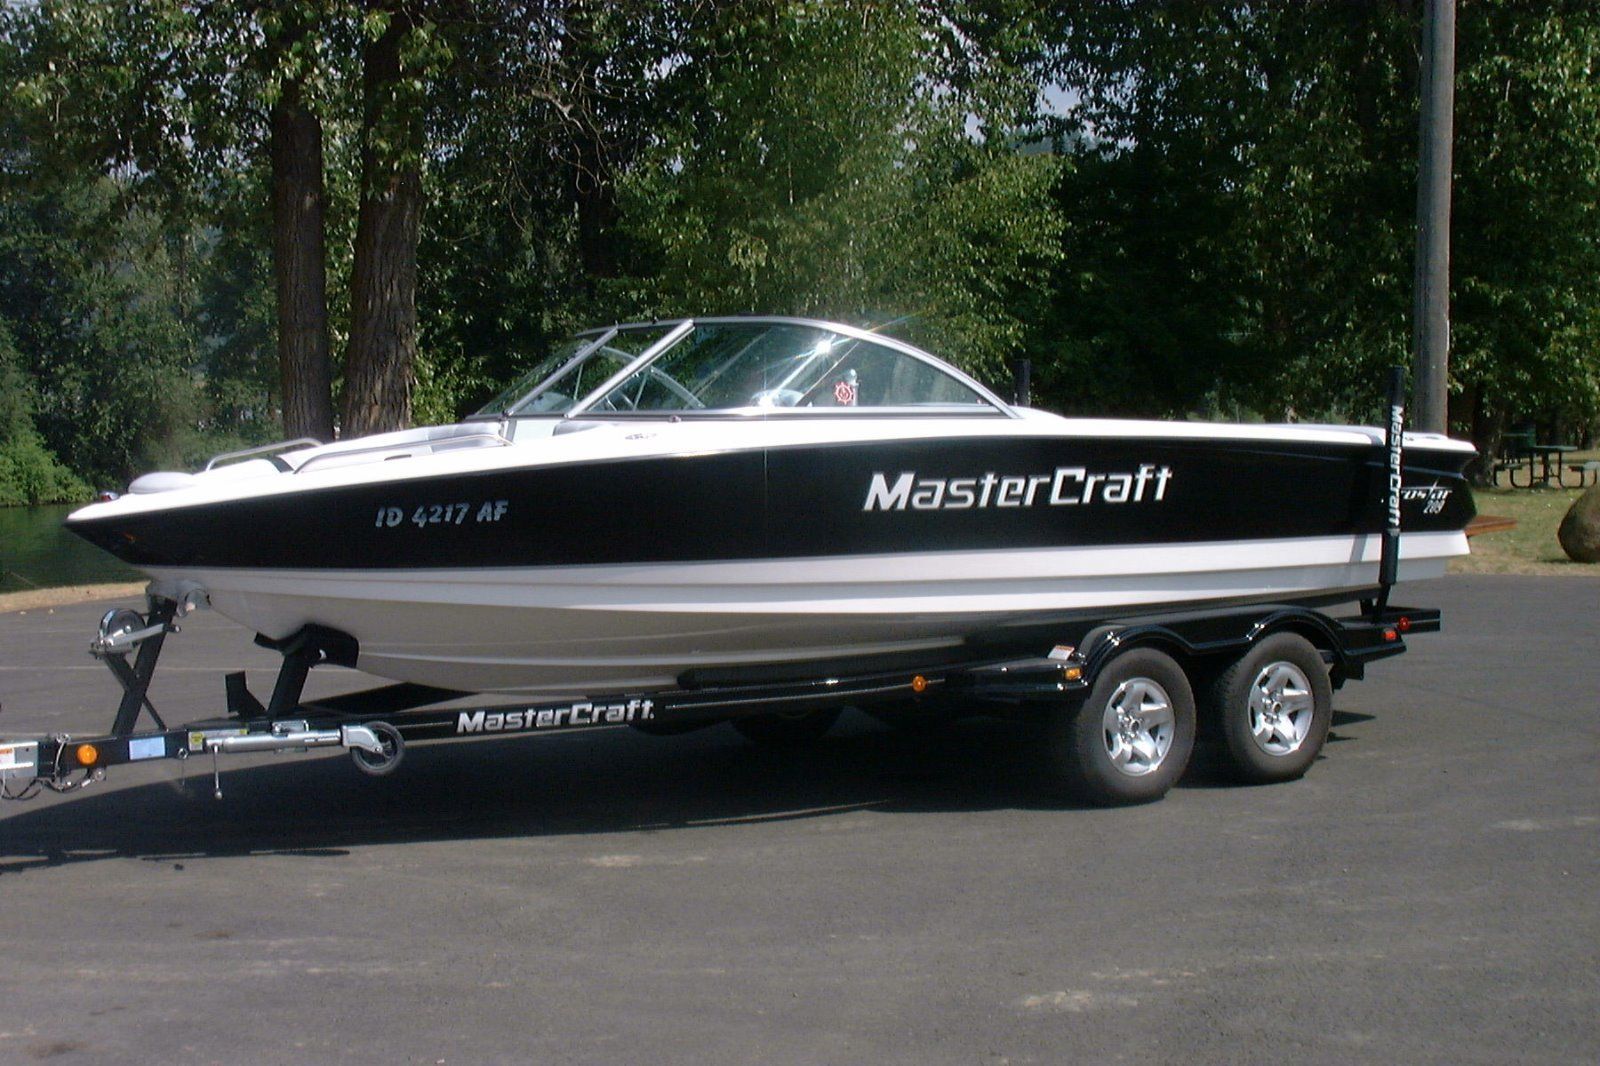 Mastercraft ProStar 209 2003 for sale for $30,000 - Boats ...